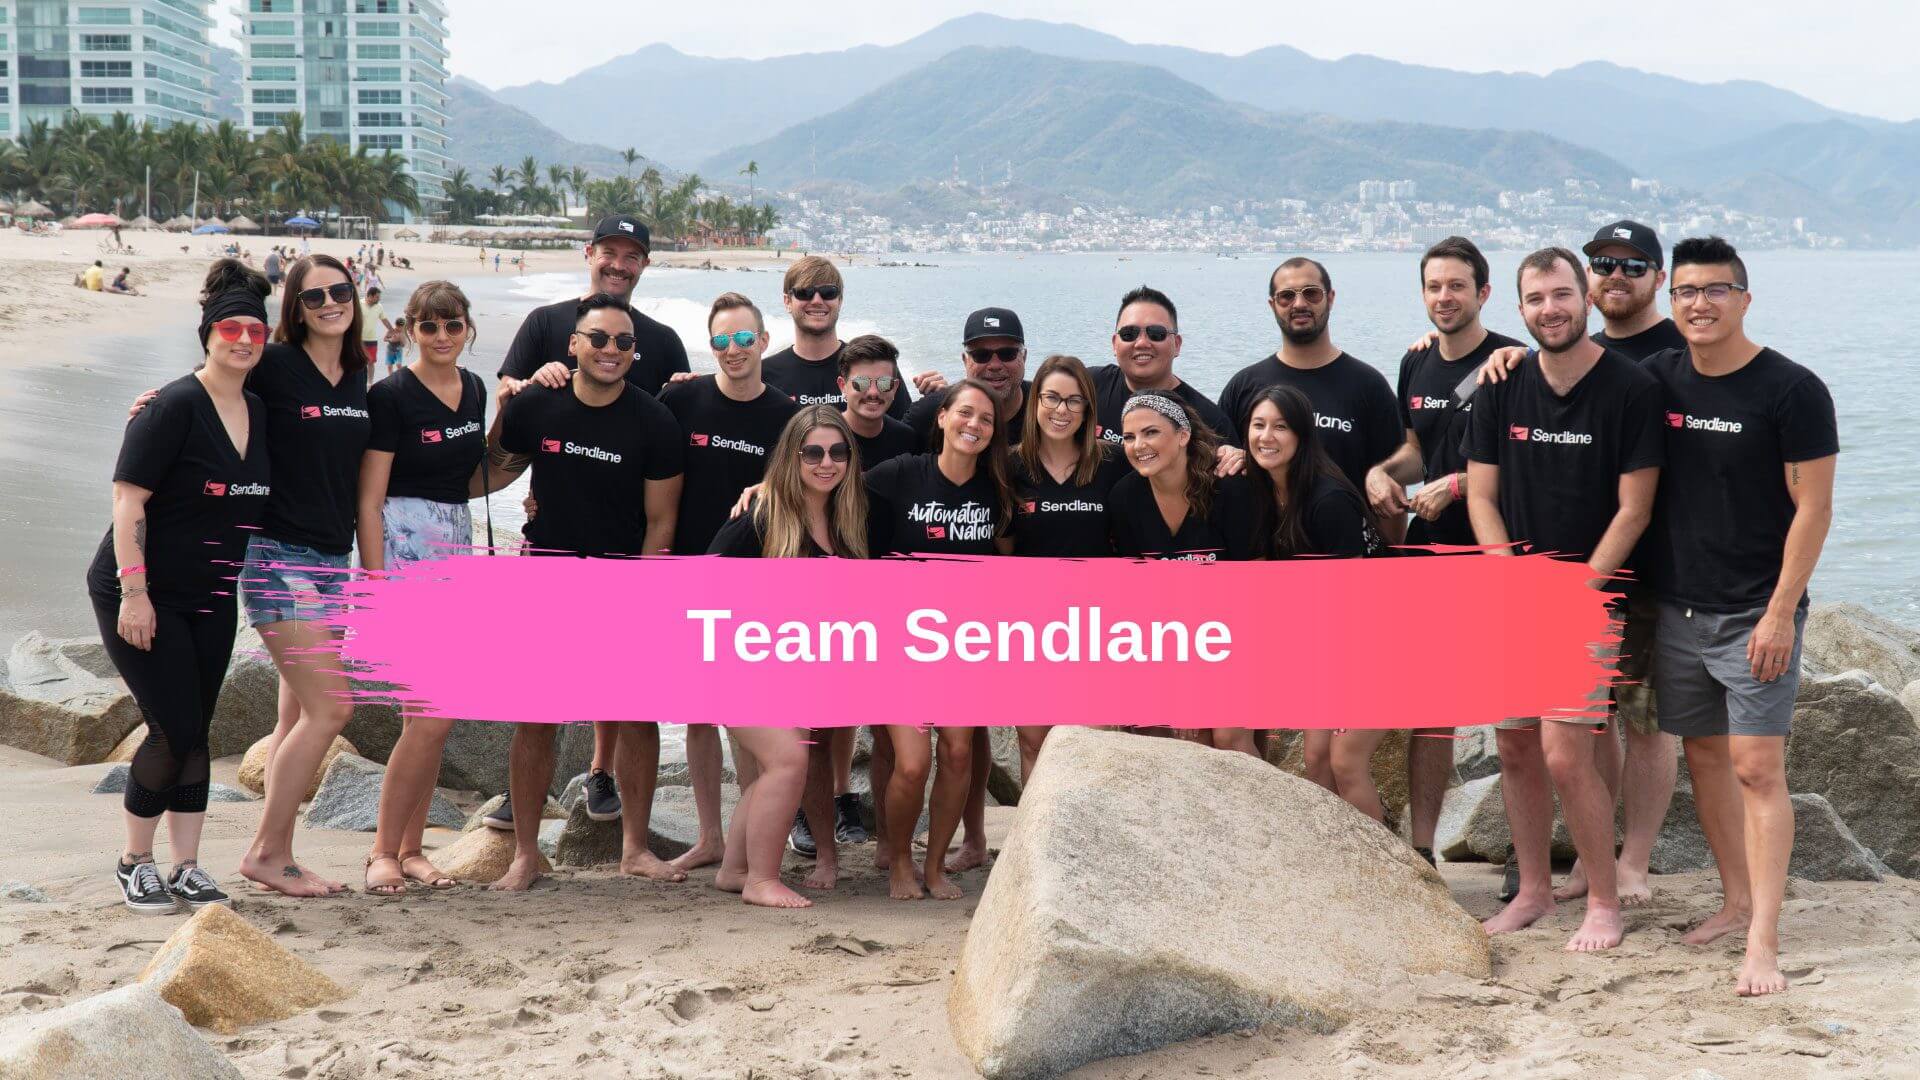 Sendlane, Sendlane software, Sendlane email marketing, How Recooty helped Sendlane, Software, Hiring software, applicant tracking system, team building, team culture, positive workplace